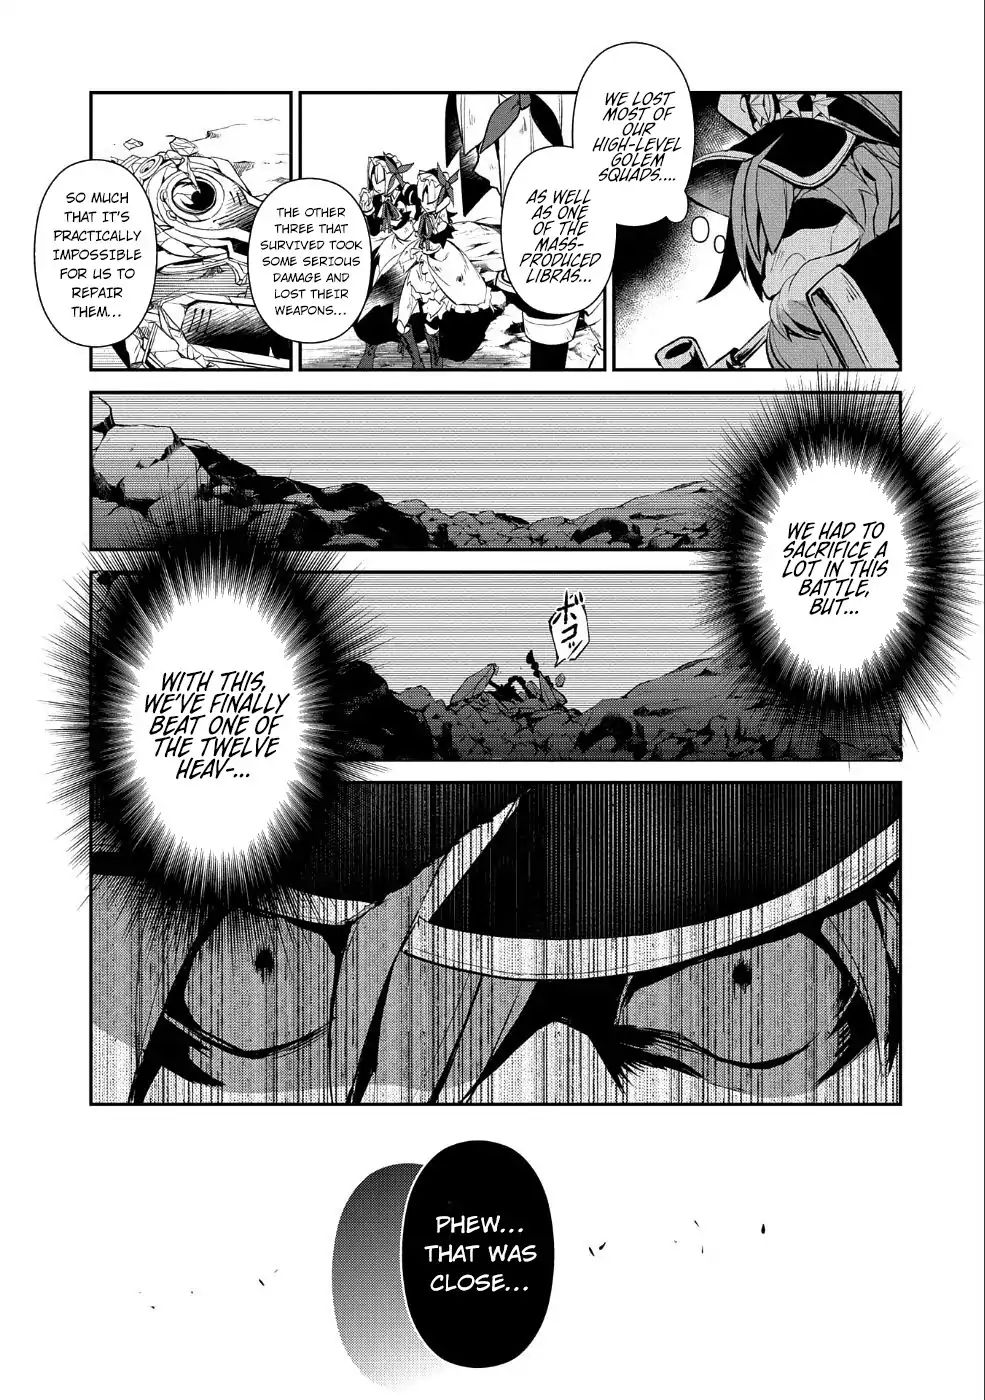 Yasei no Last Boss ga Arawareta! Vol.1 Chapter 22